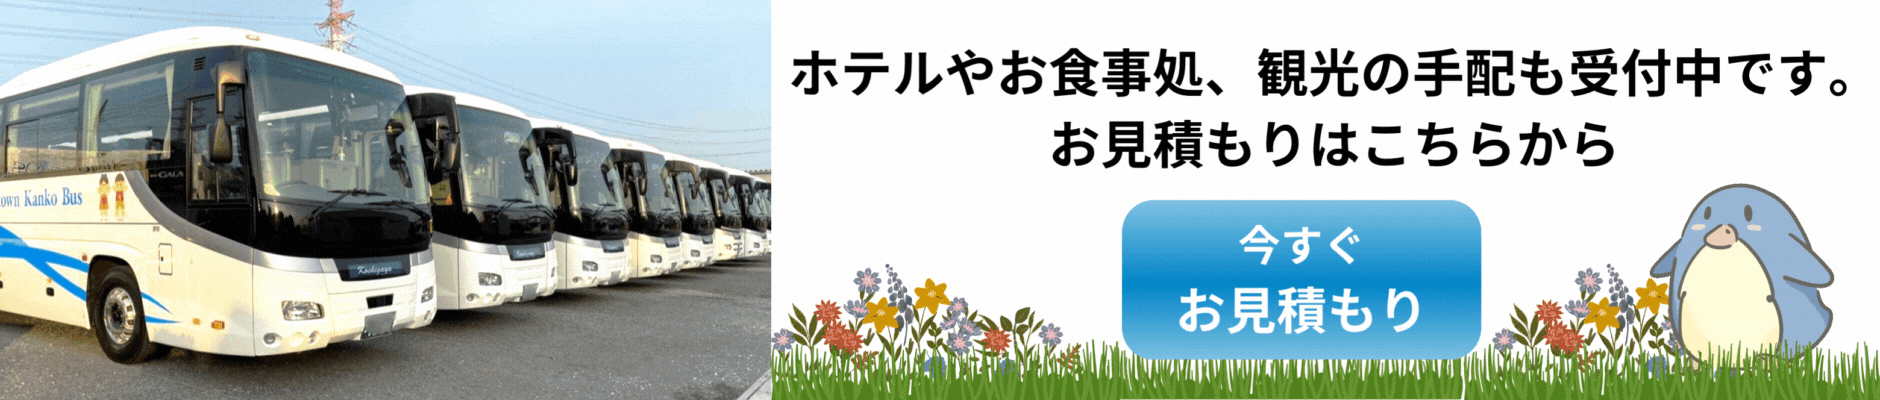 Japan bus fare simulator